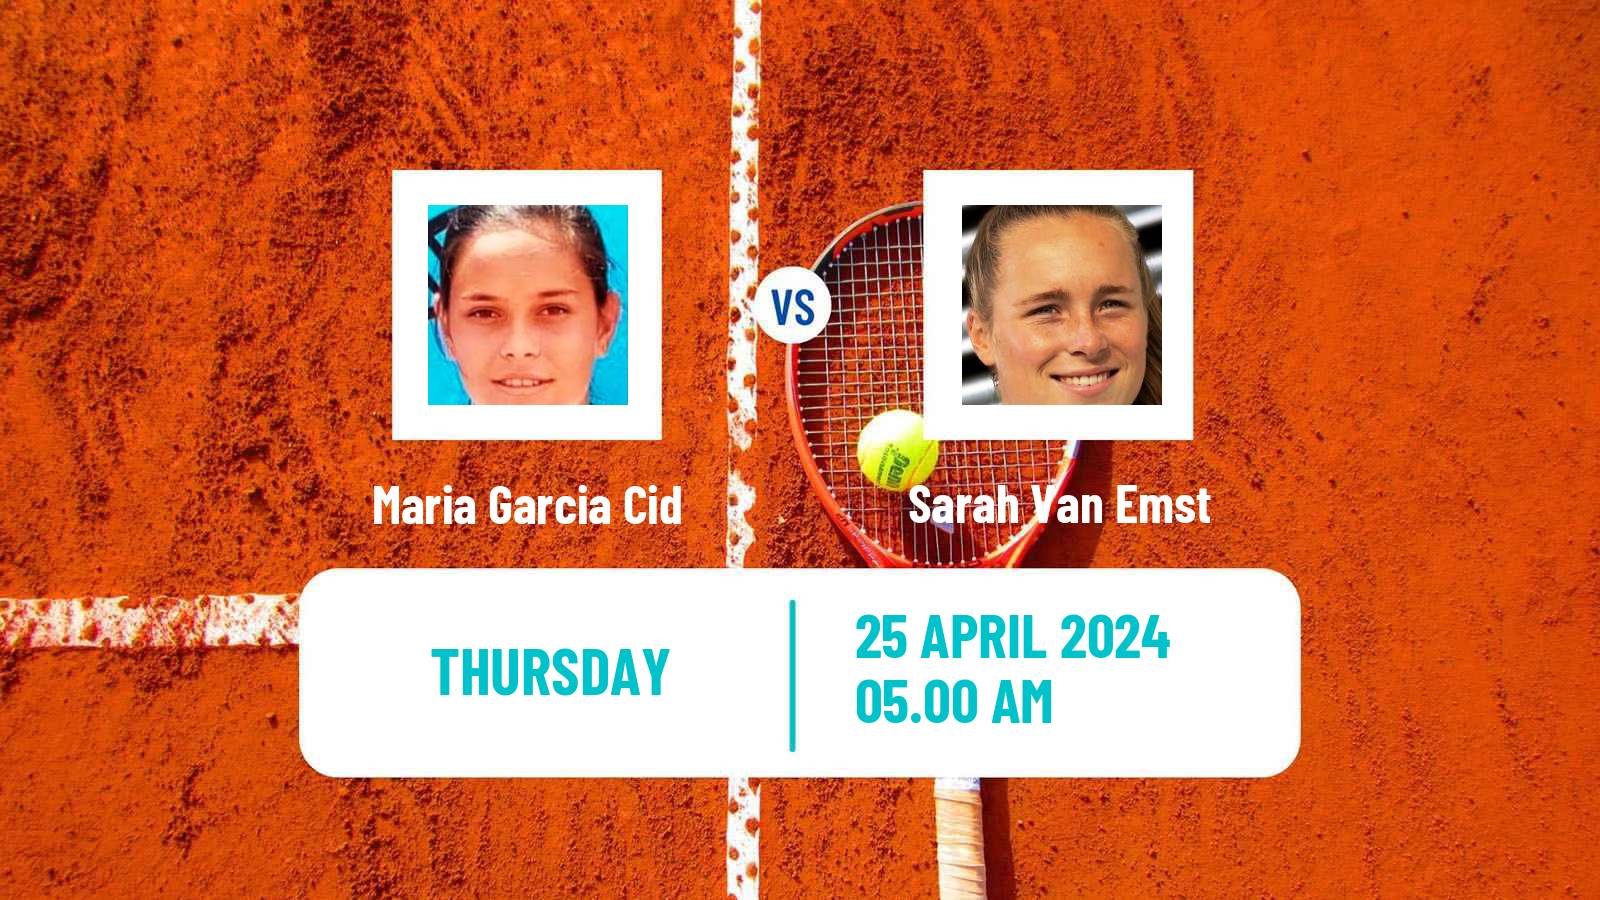 Tennis ITF W15 Telde 4 Women Maria Garcia Cid - Sarah Van Emst